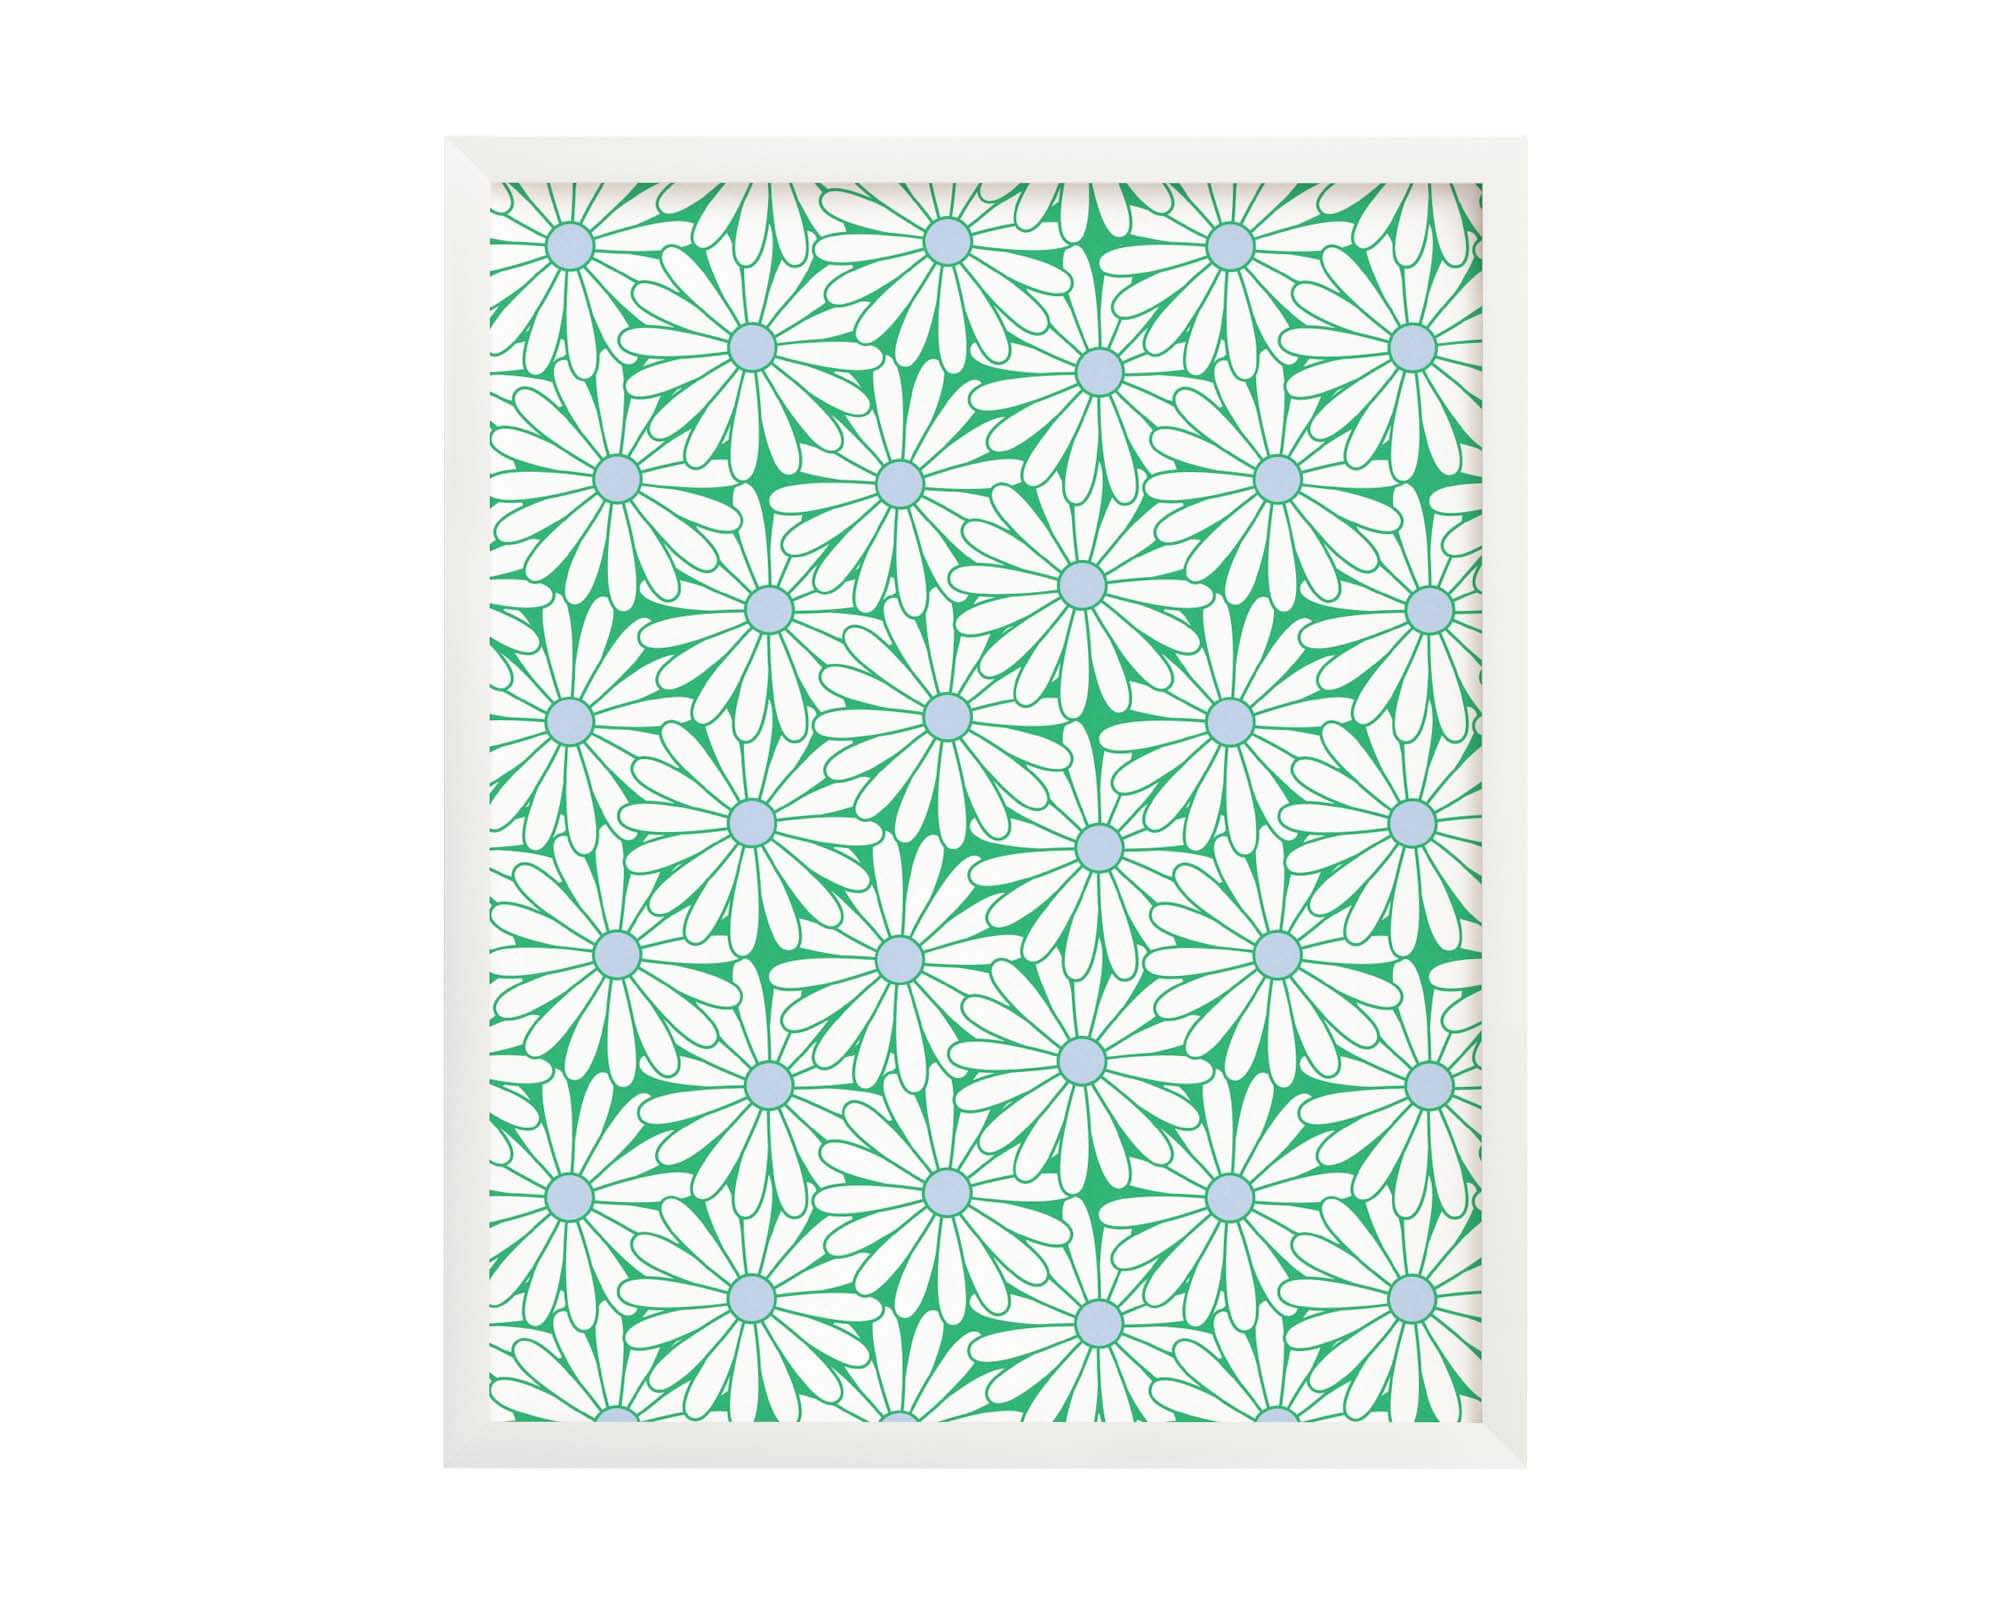 "Daisy Love" vibrant green and blue modern floral daisy pattern archival giclée art print. Made in USA by My Darlin' @mydarlin_bk